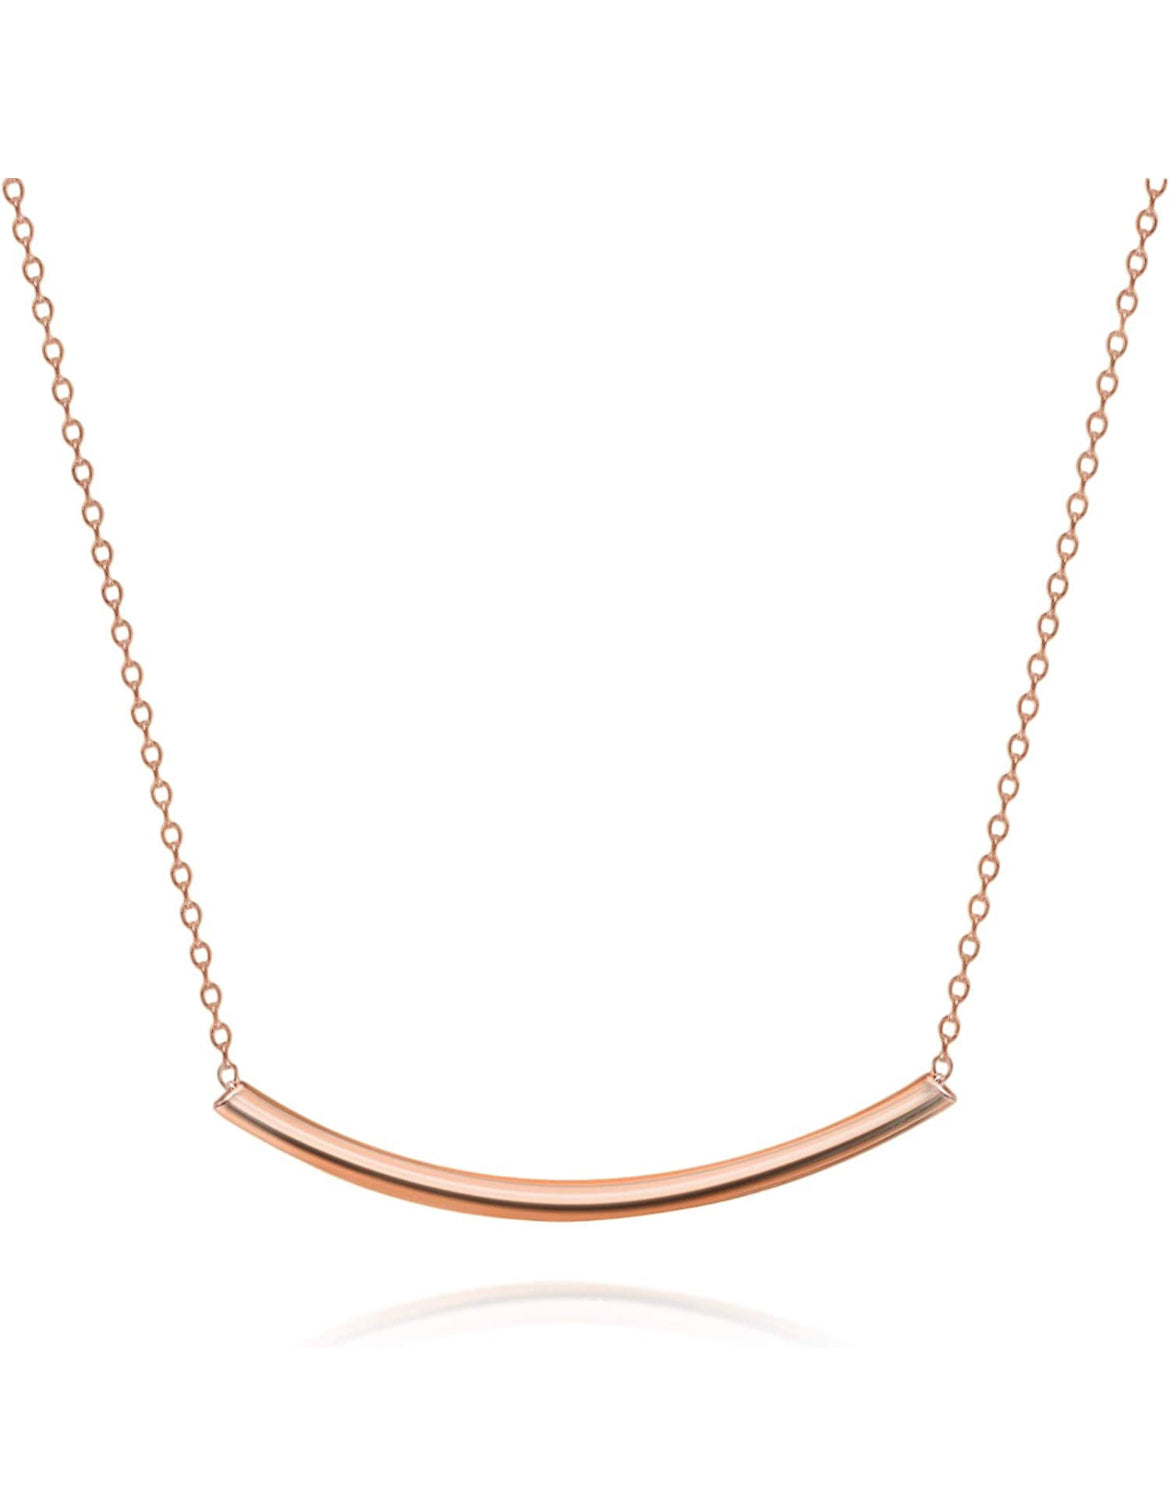 Samantha - 18k Rose Gold Vermeil Dainty Curve Necklace